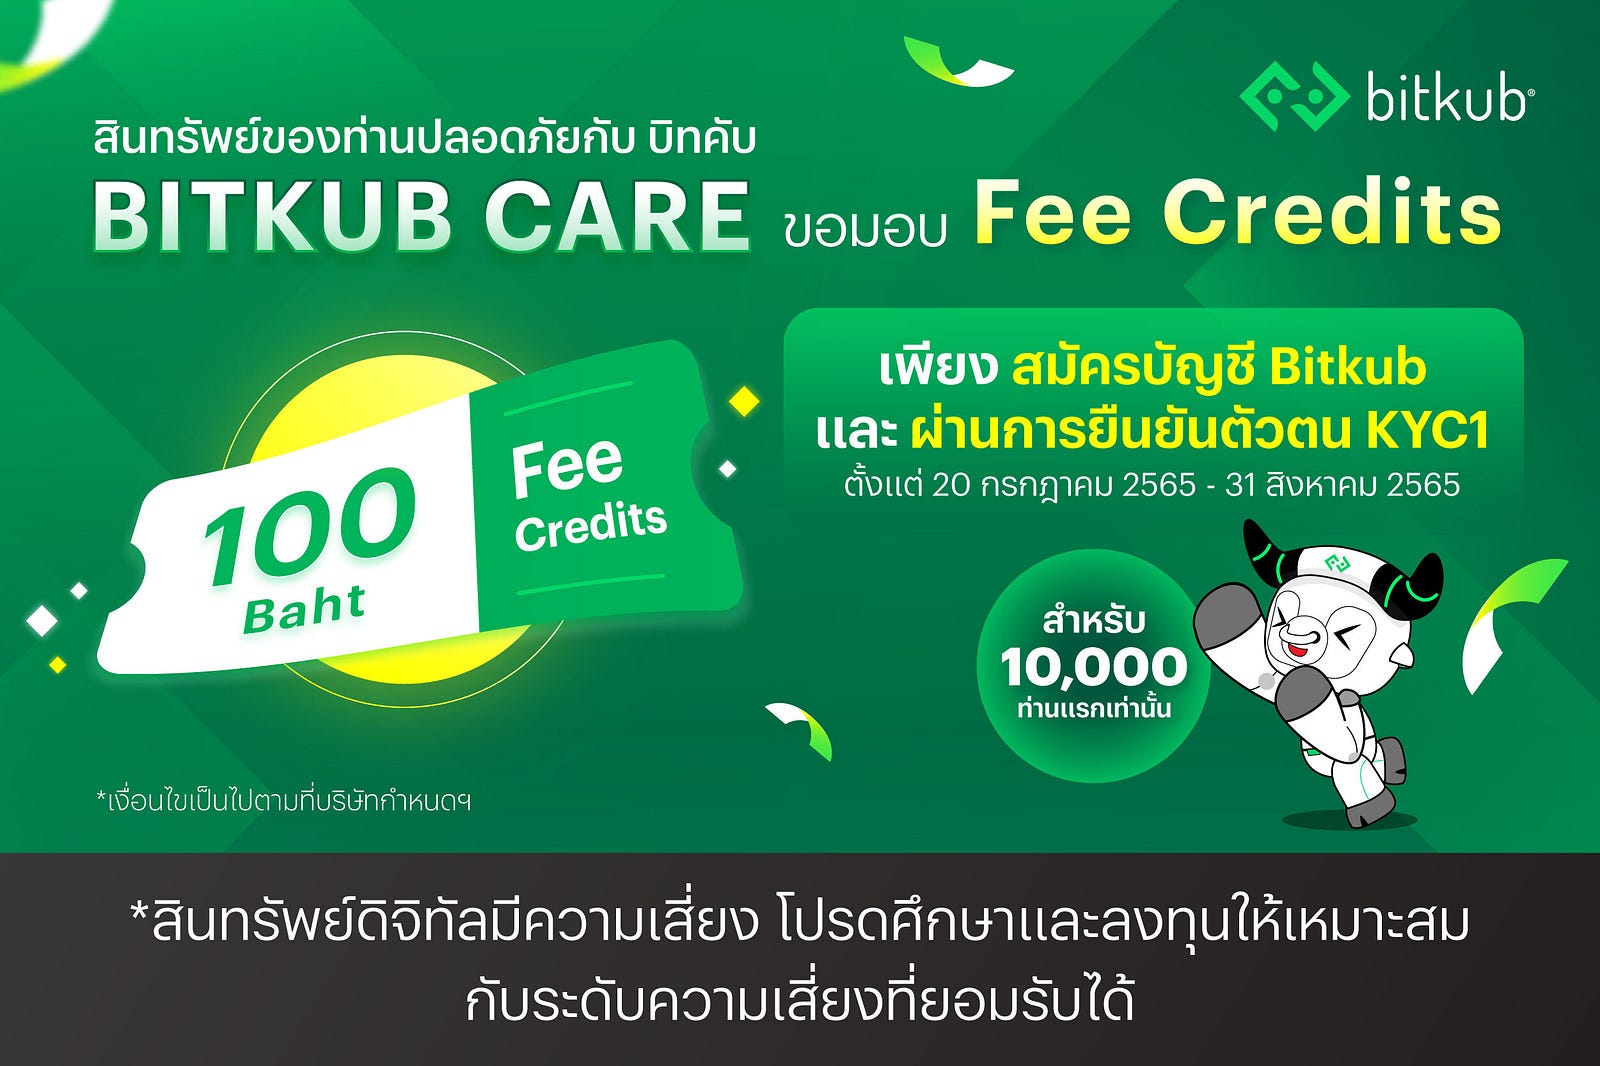 Bitkub Care ส่งความห่วงใย ลูกค้าใหม่รับ Fee Credits มูลค่า 100 บาท